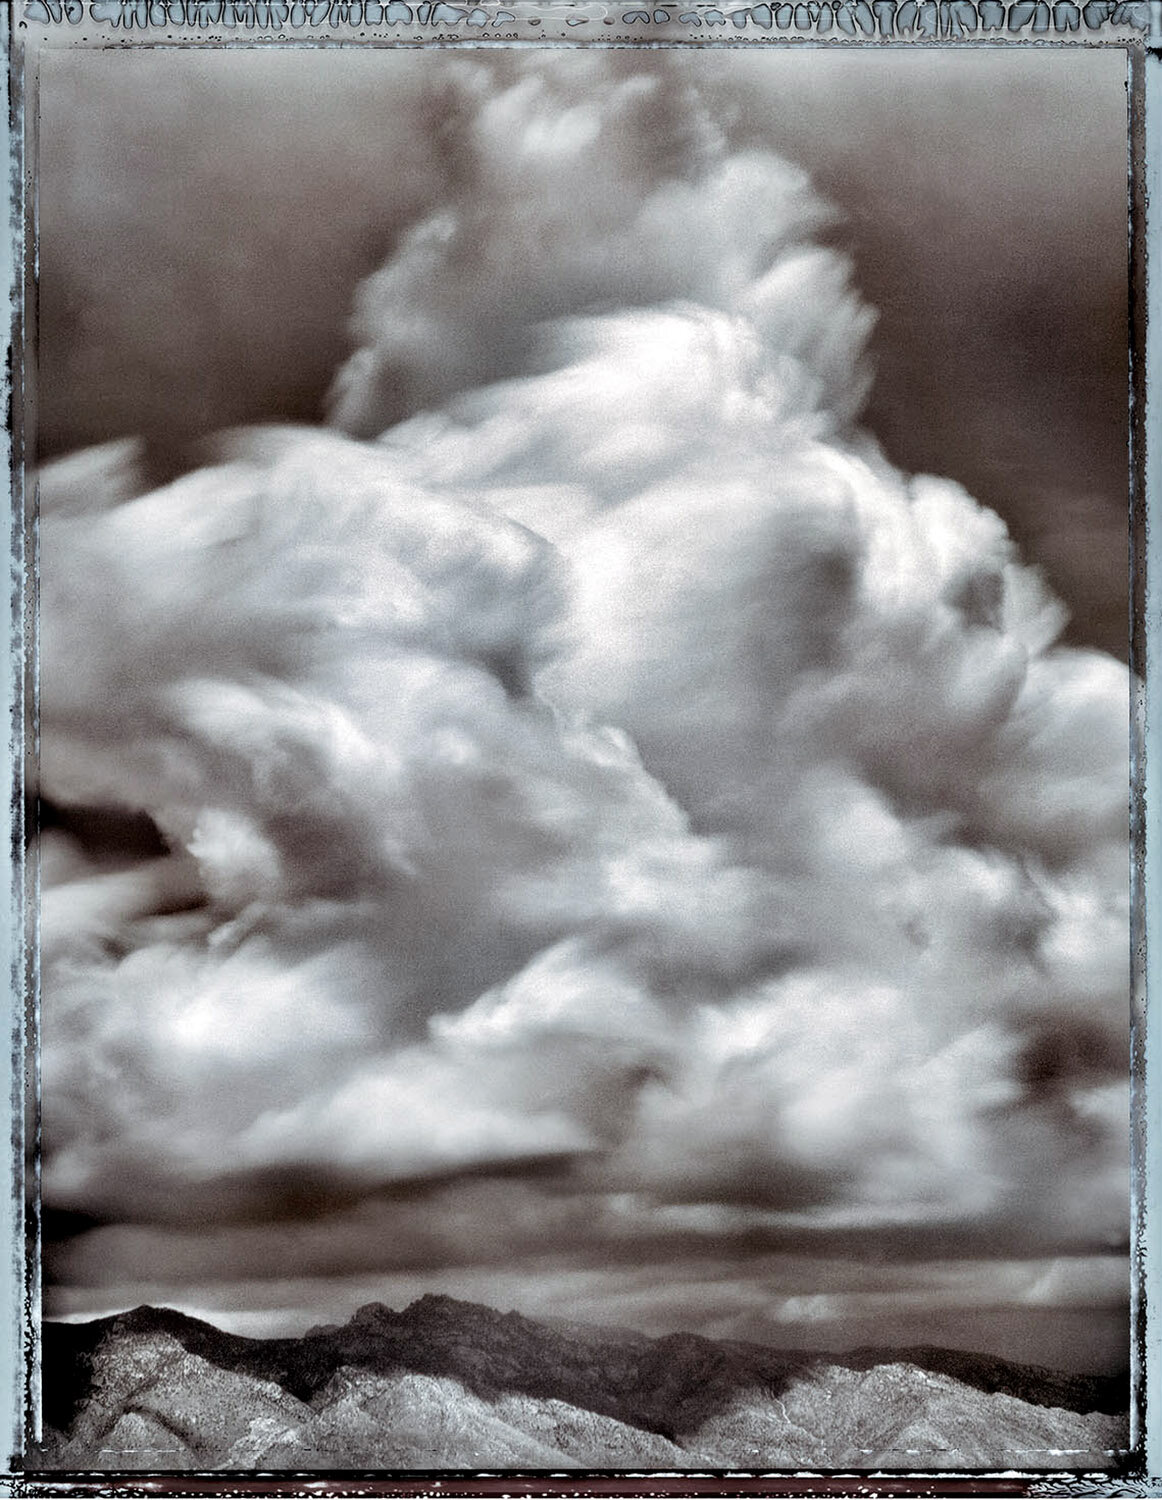 Cloud # 100, Stormcloud Building over the Catalinas, Tucson, Arizona